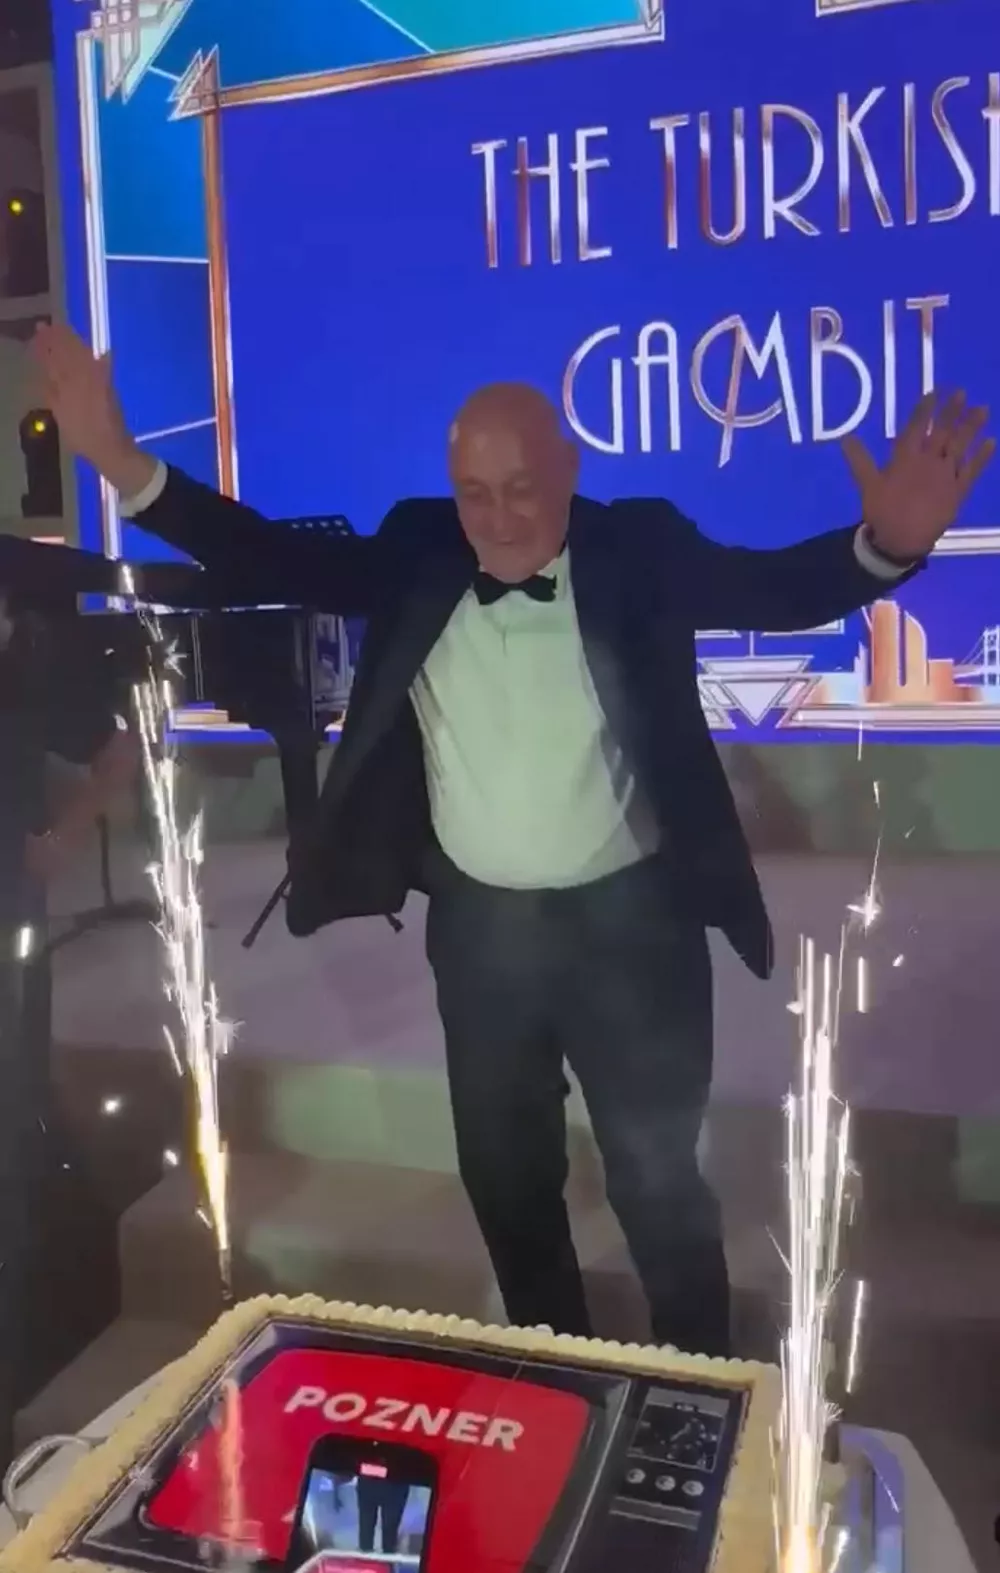 Владимир Познер во время празднования kkiqqqidrrixatf queiueiqutirkkrt